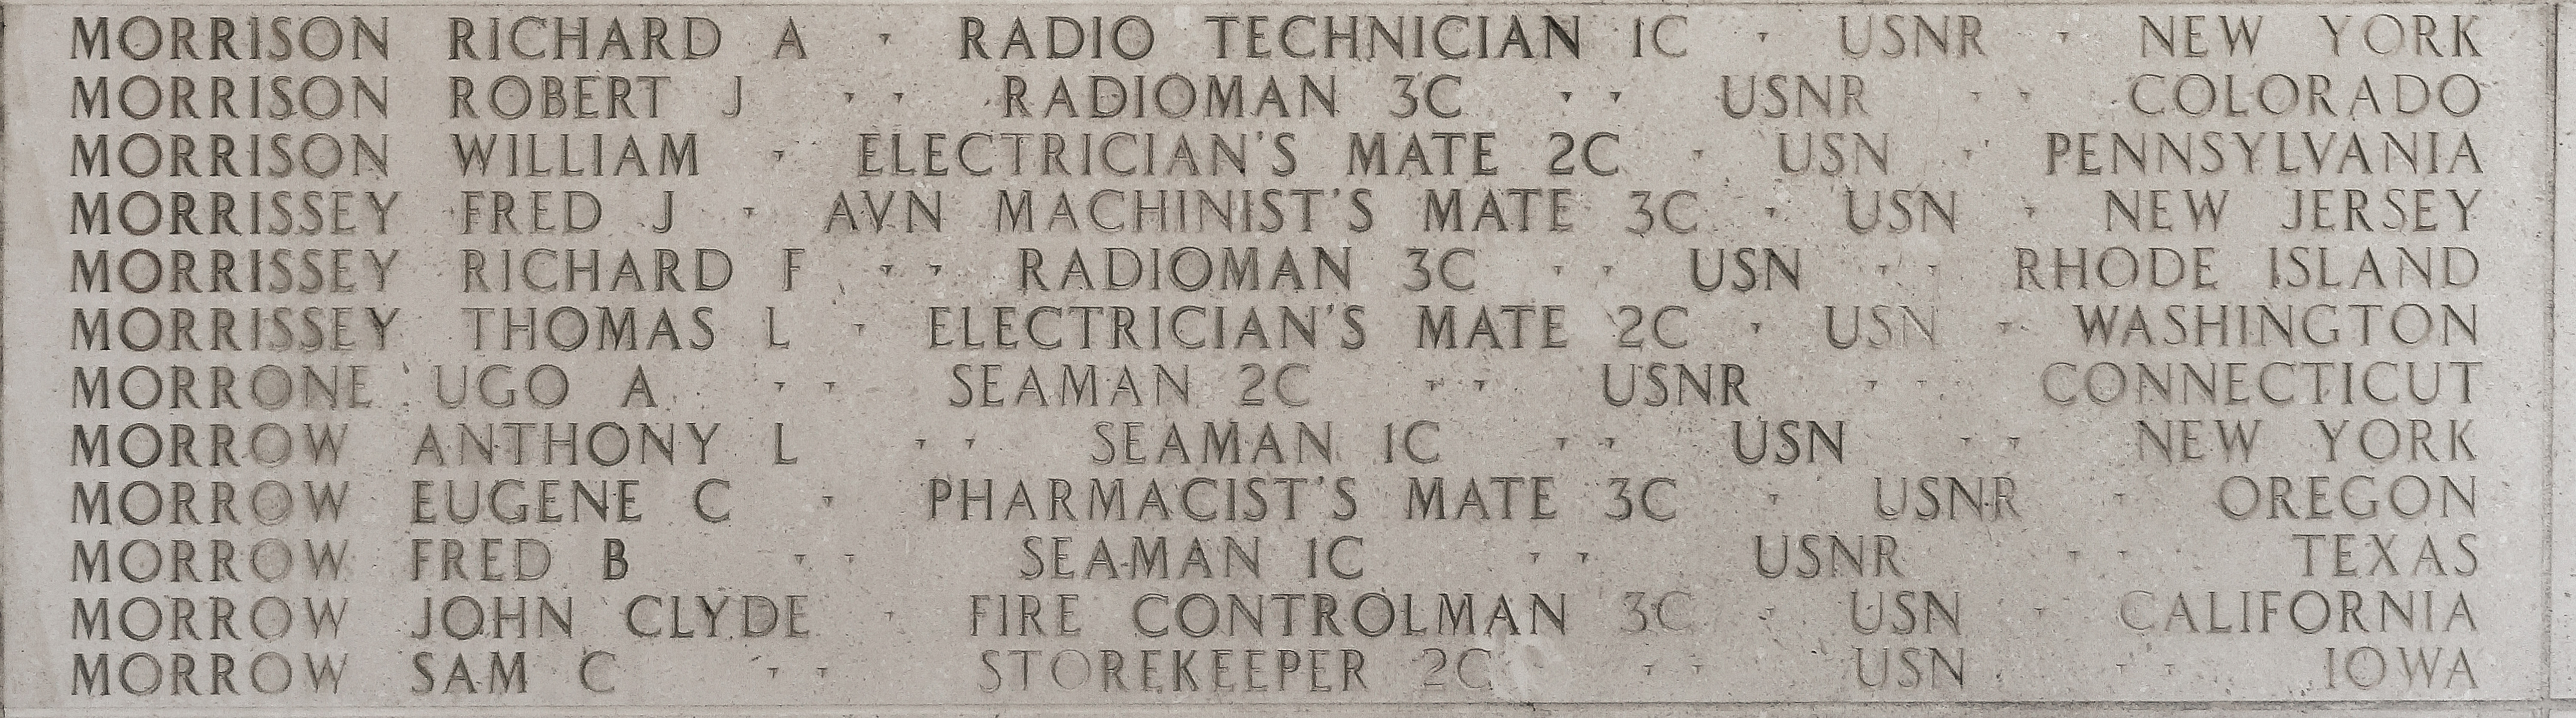 William  Morrison, Electrician's Mate Second Class